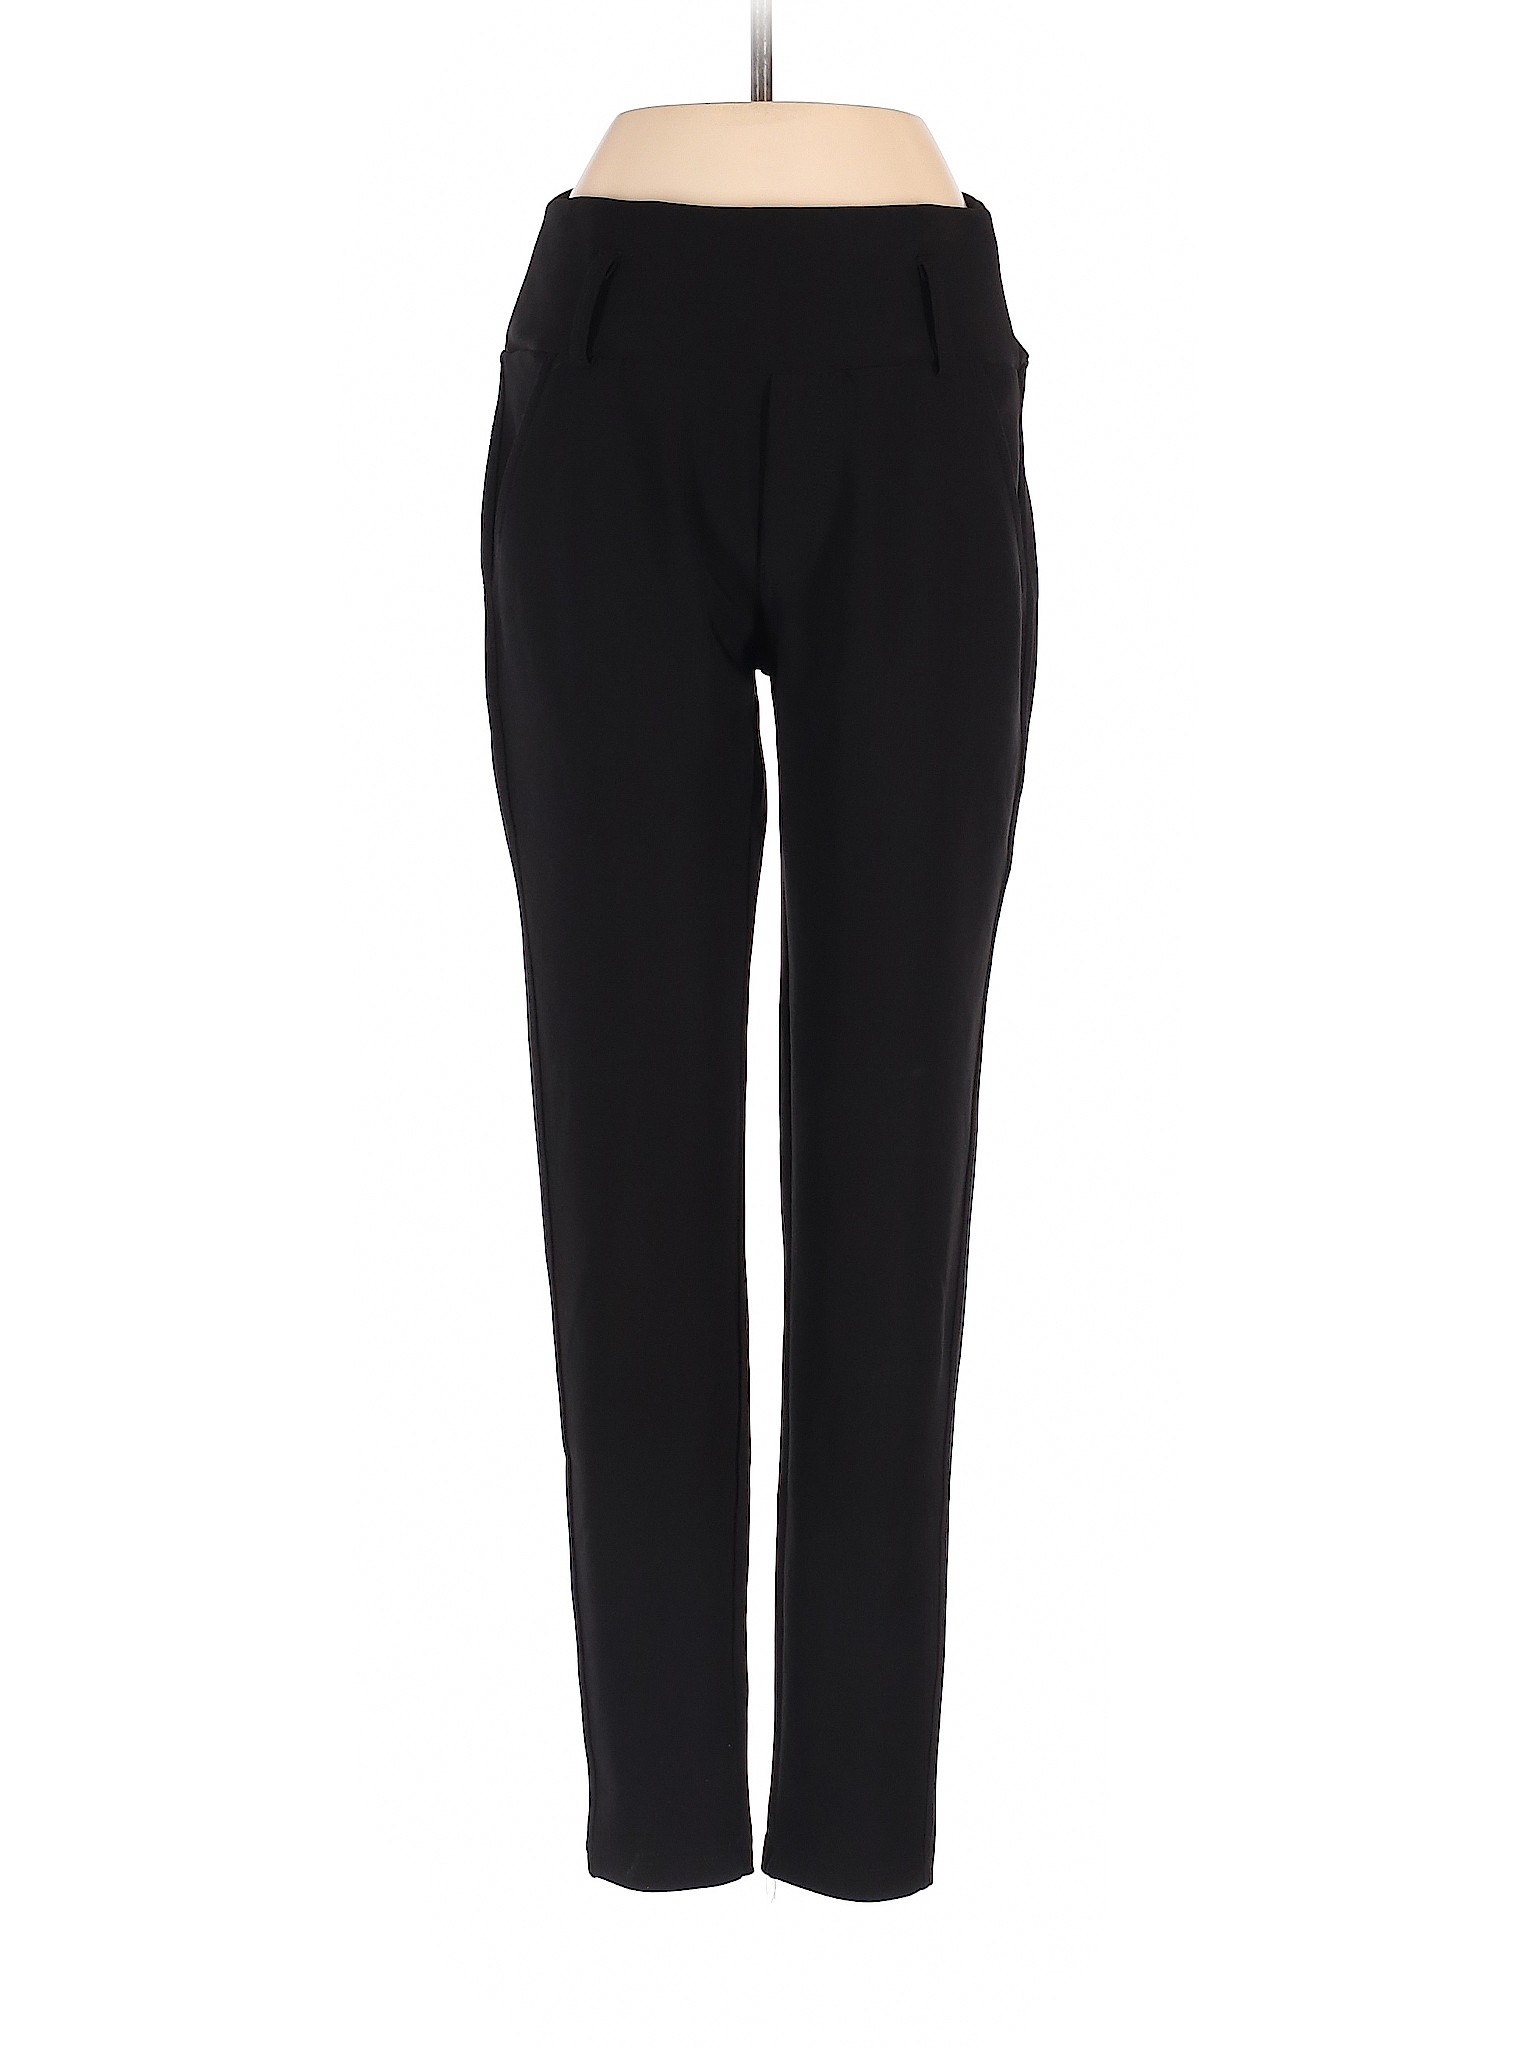 INDERO Women Black Dress Pants S | eBay